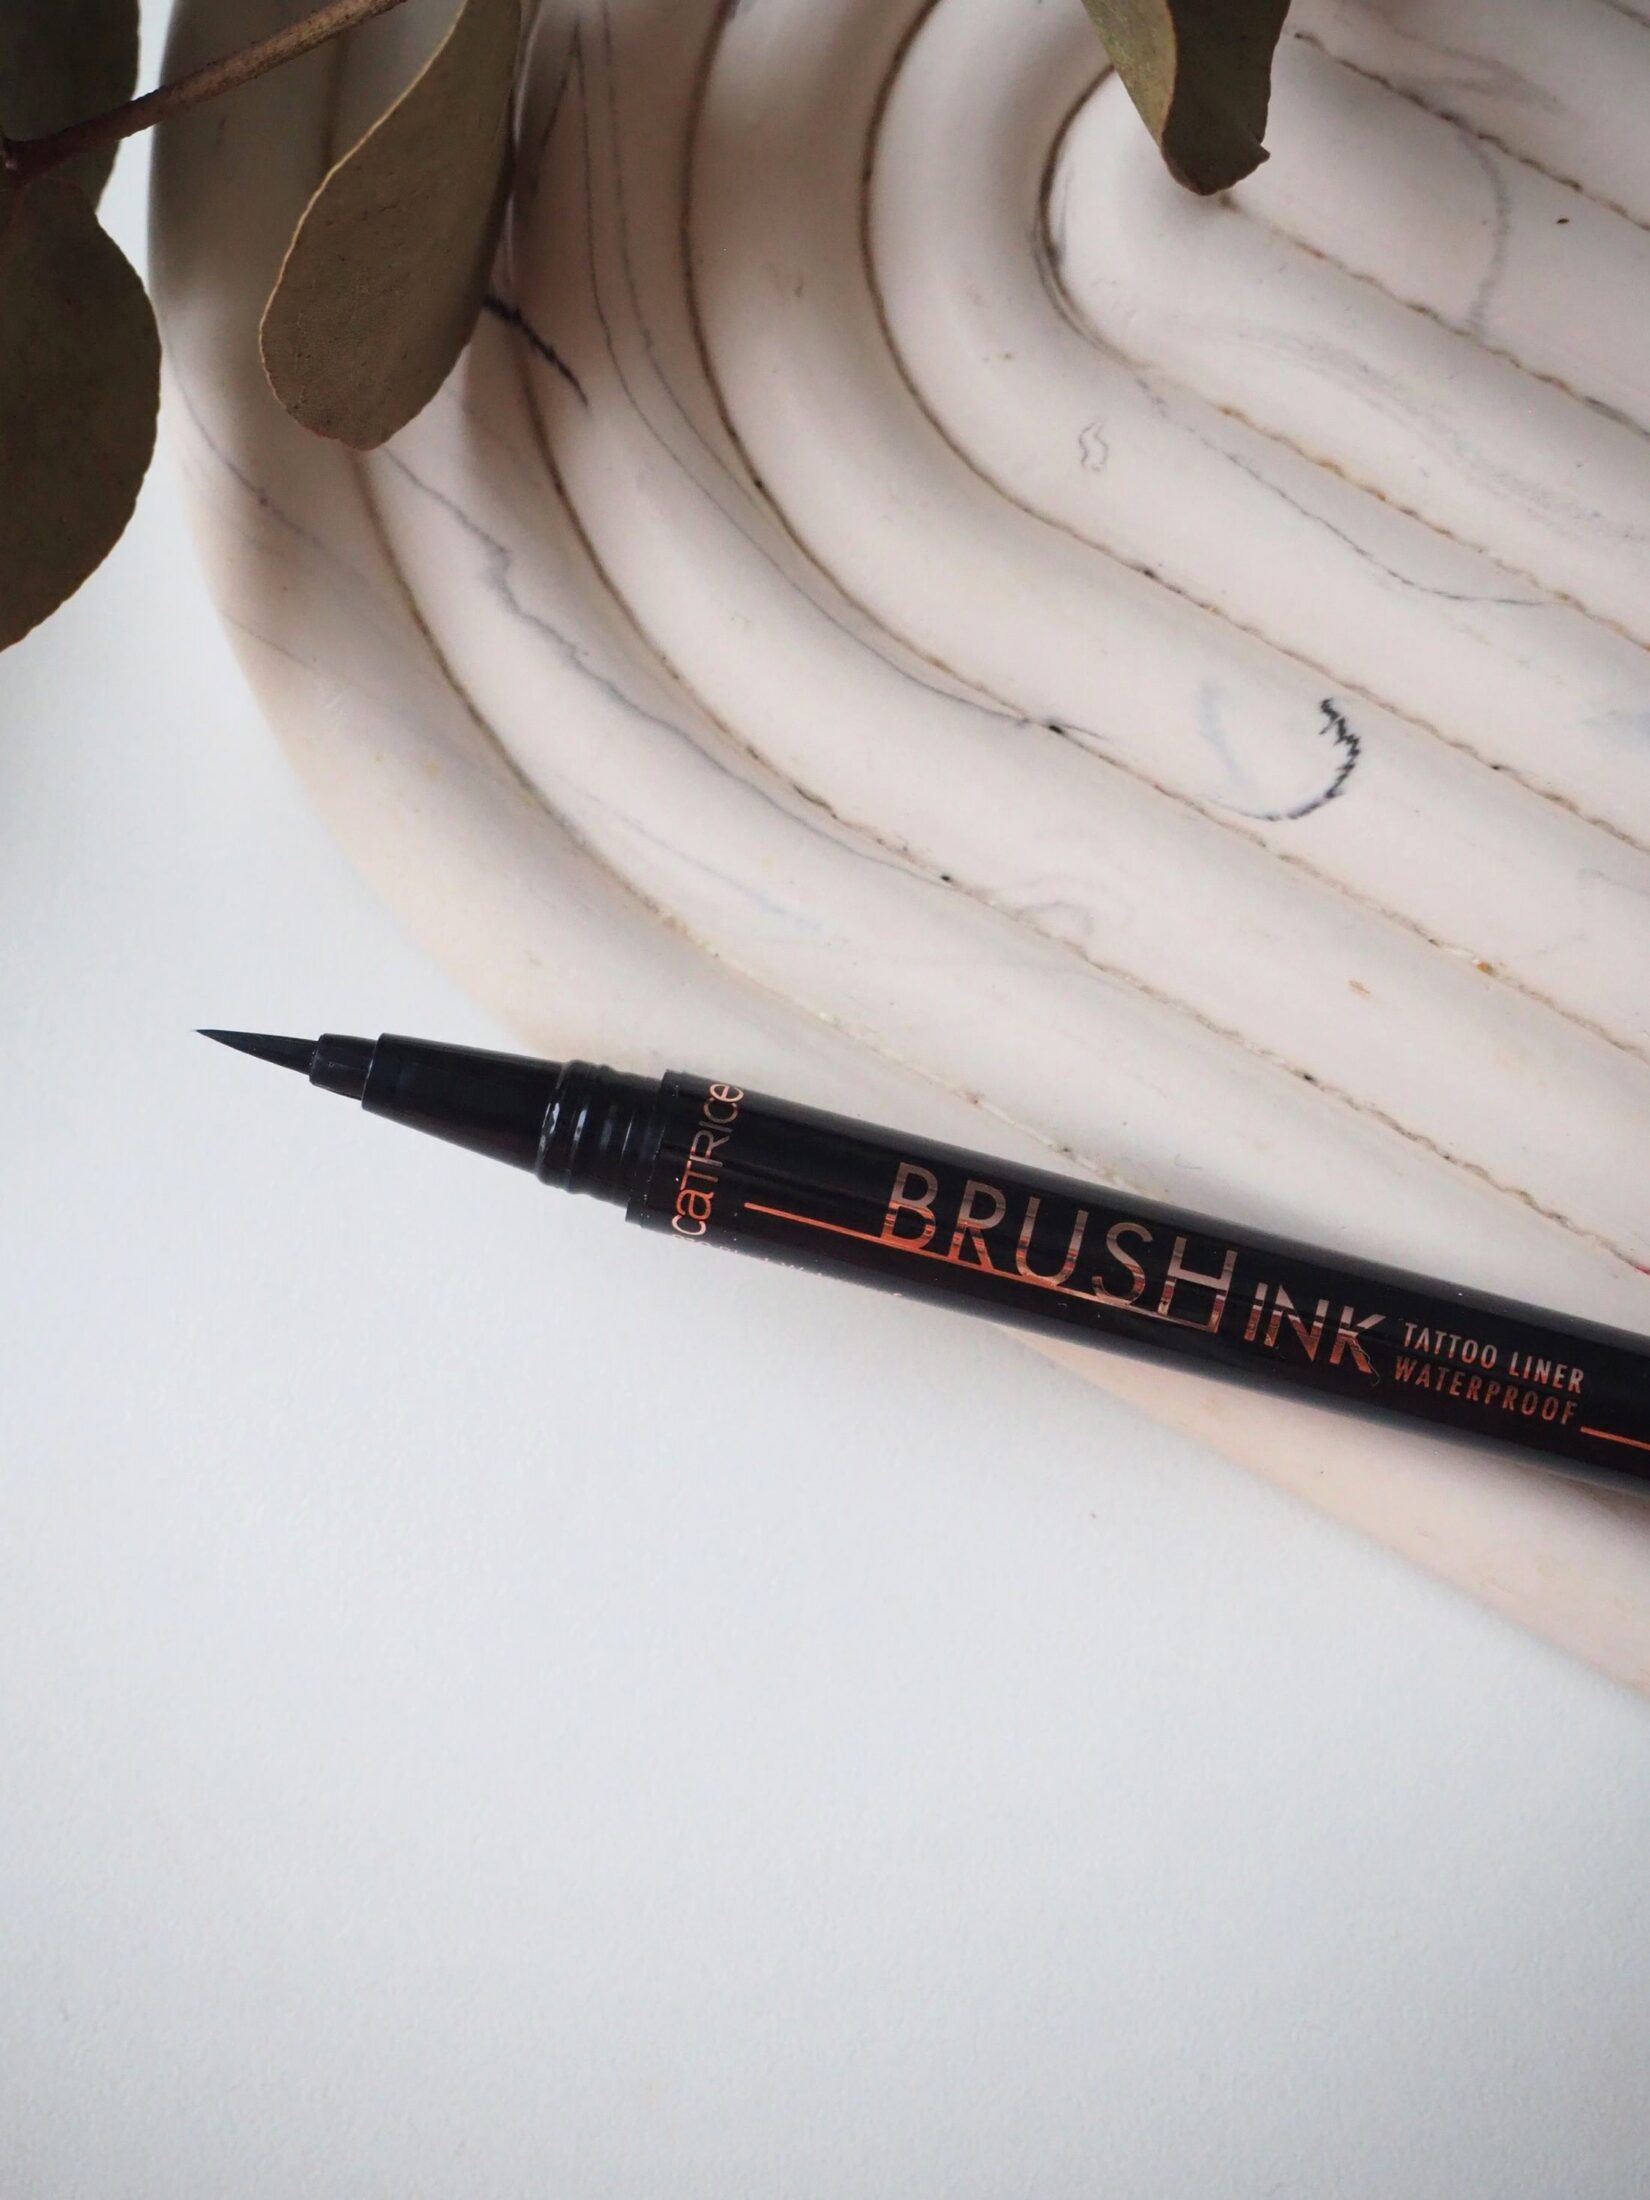 Catrice Brush Ink